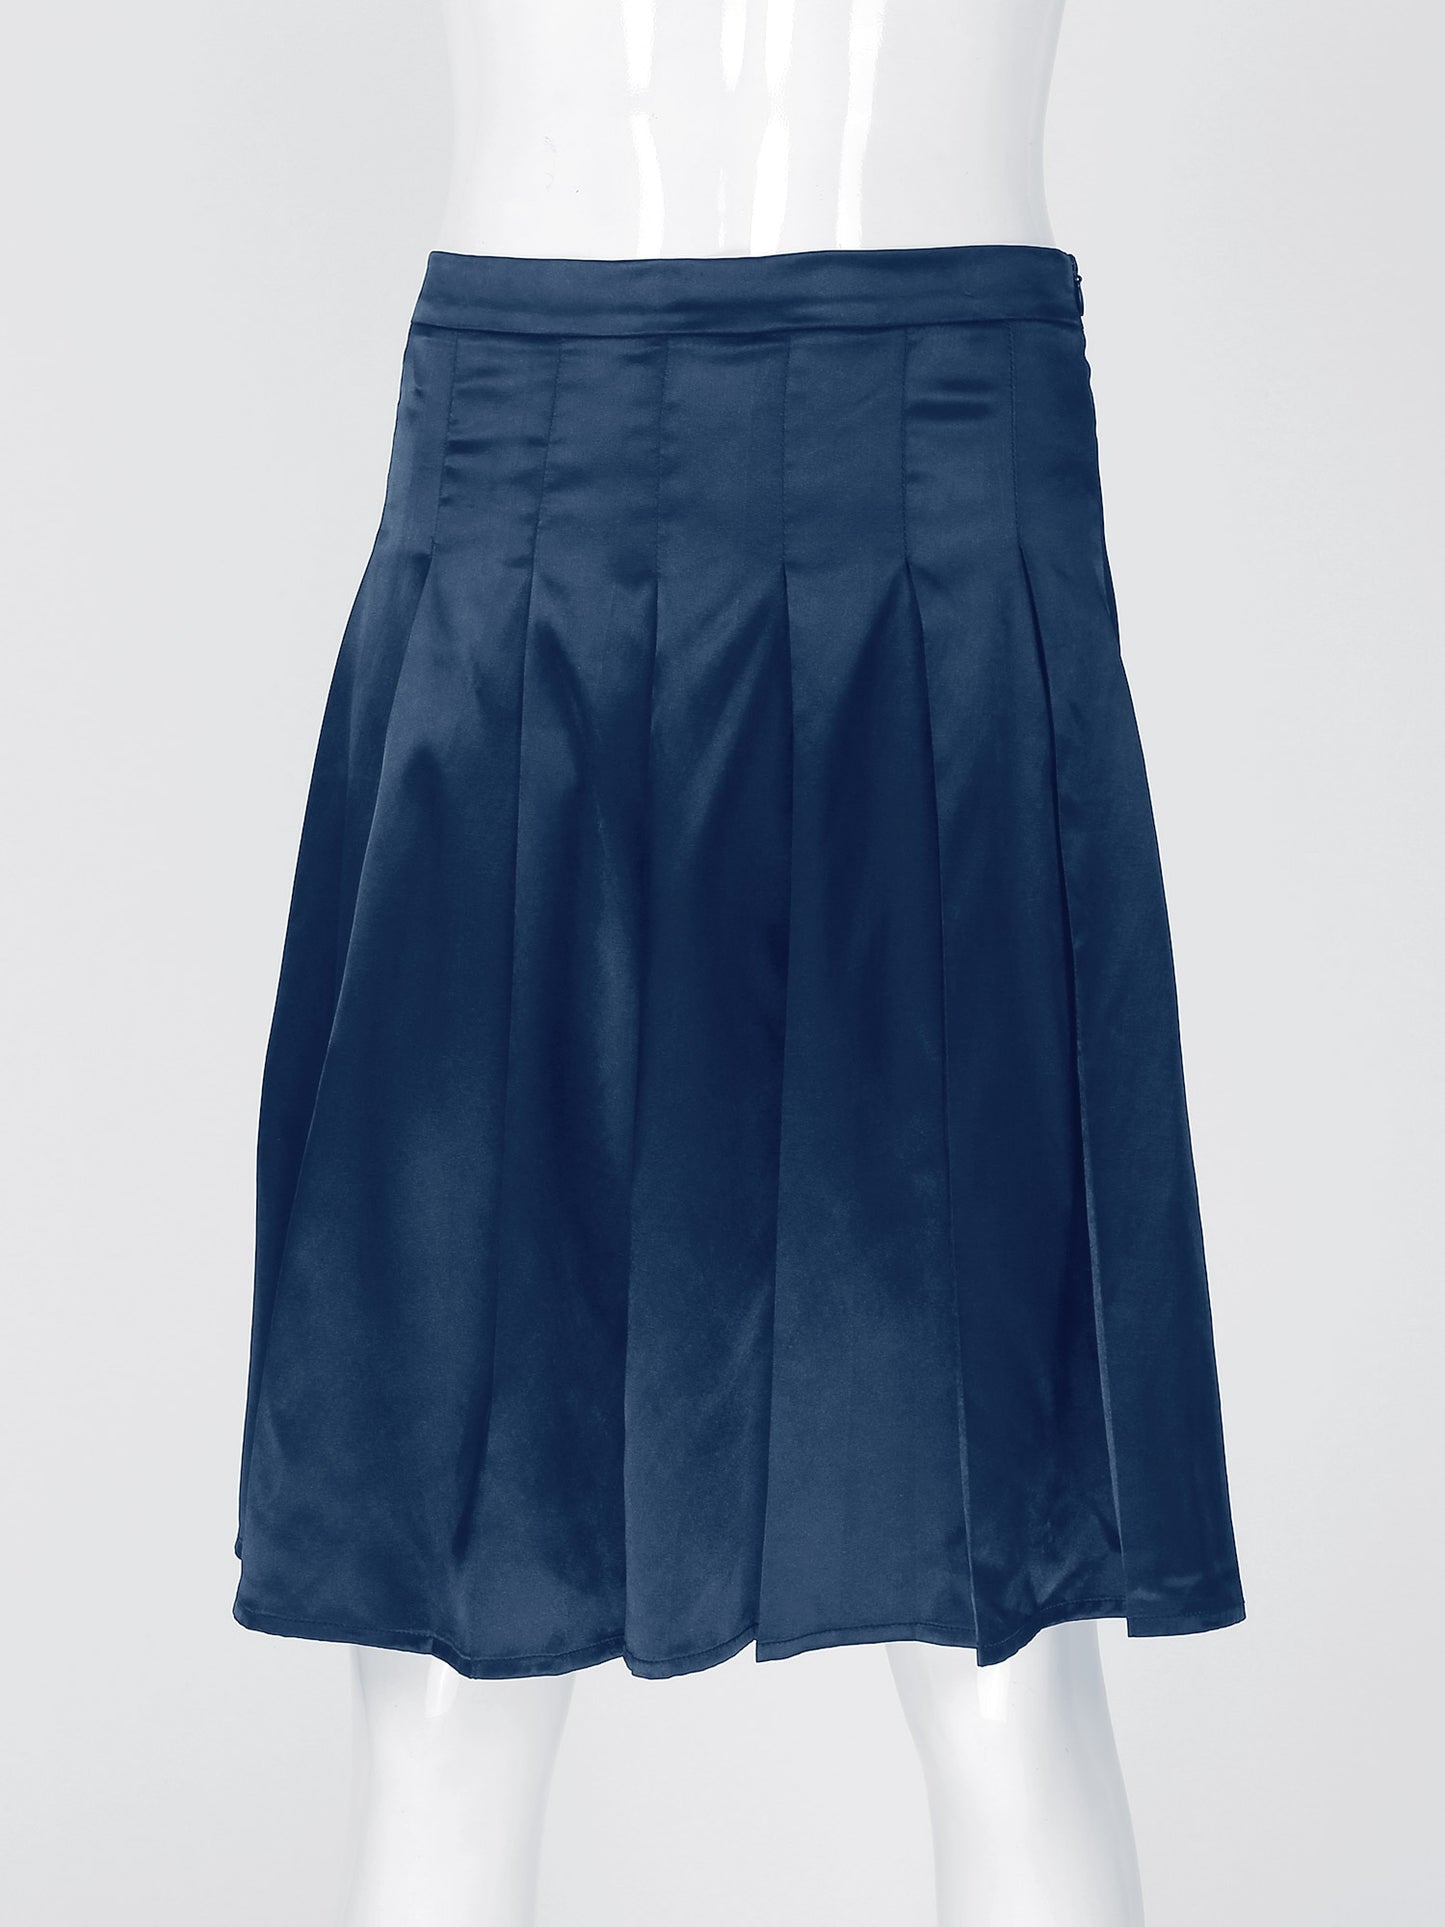 Tulle Skirted Panties: Sexy Crossdresser's Underwear